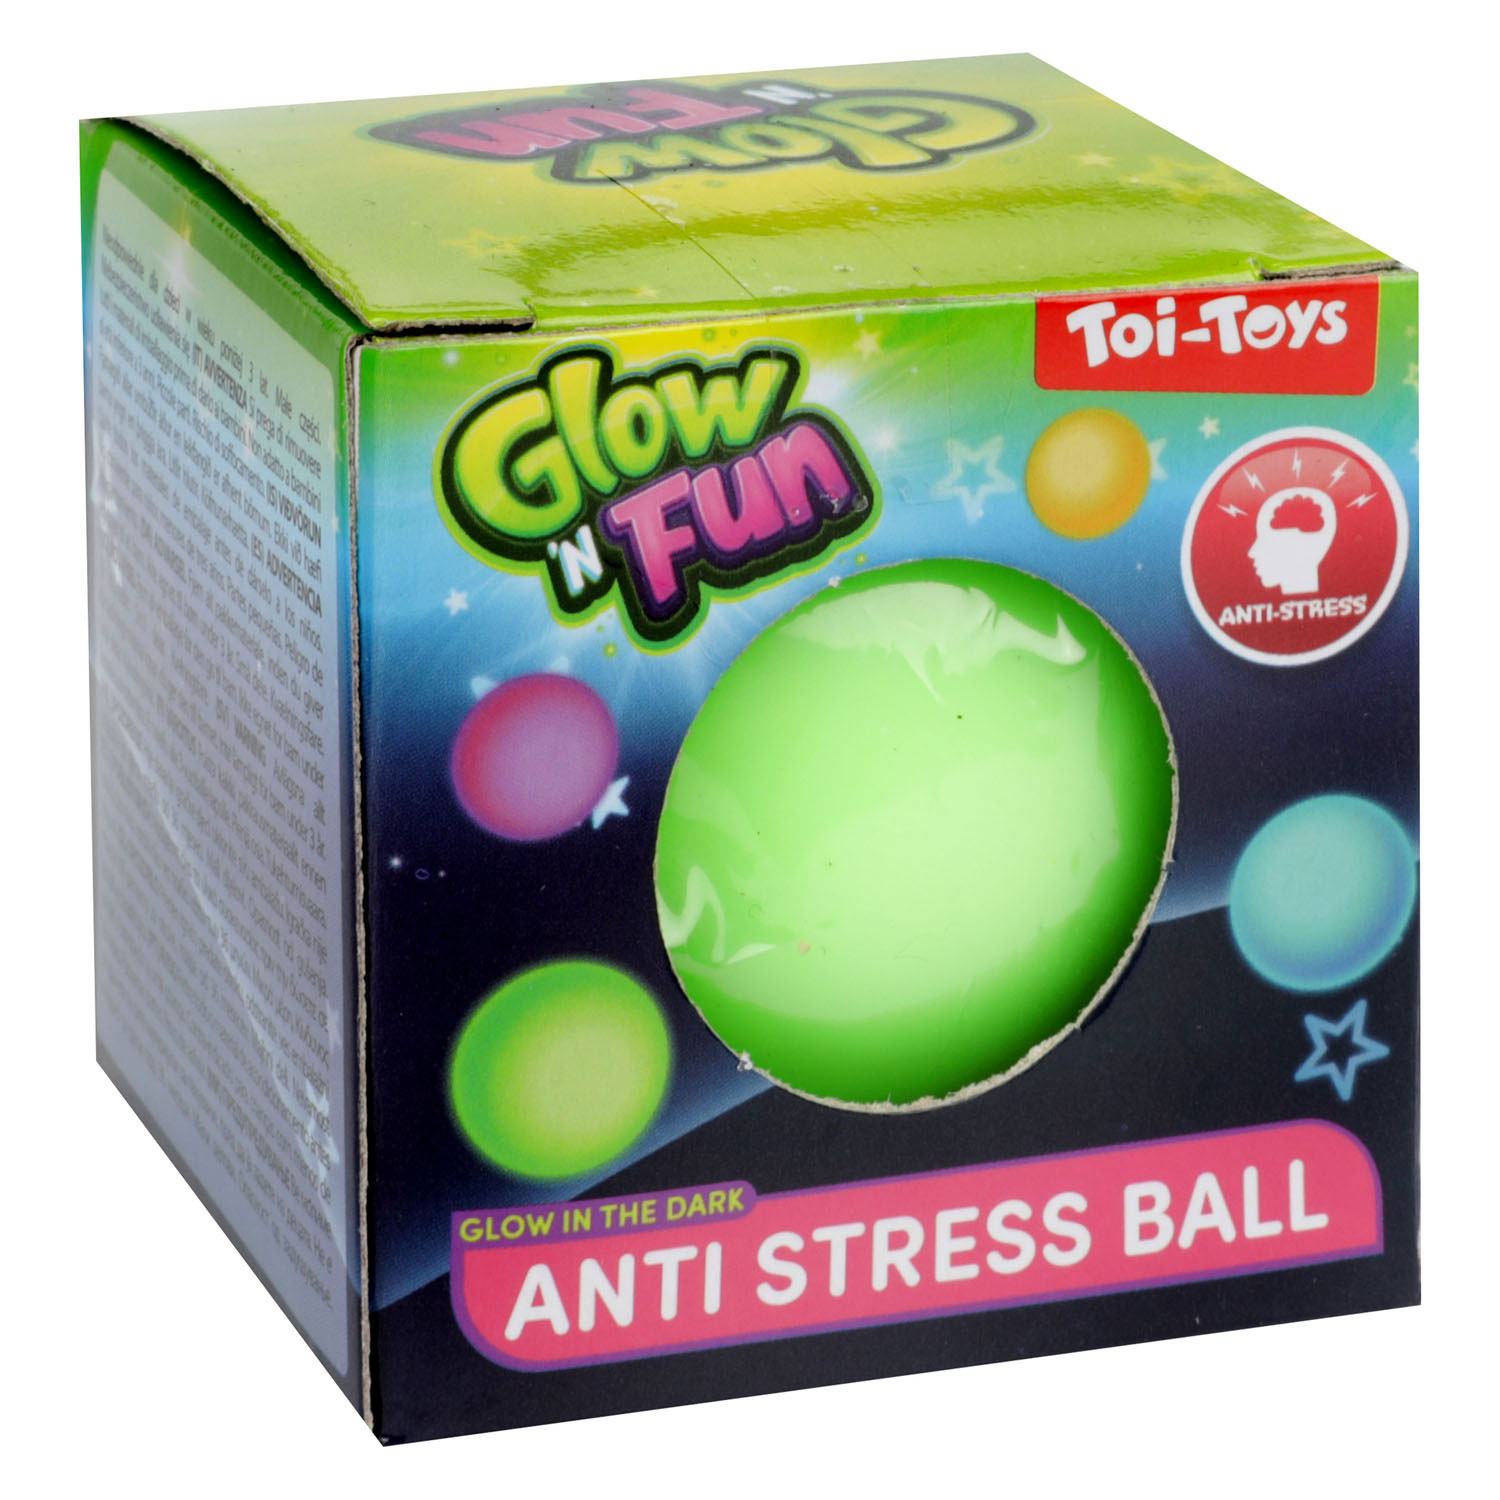 Balle anti-stress Glow N Fun qui brille dans le noir